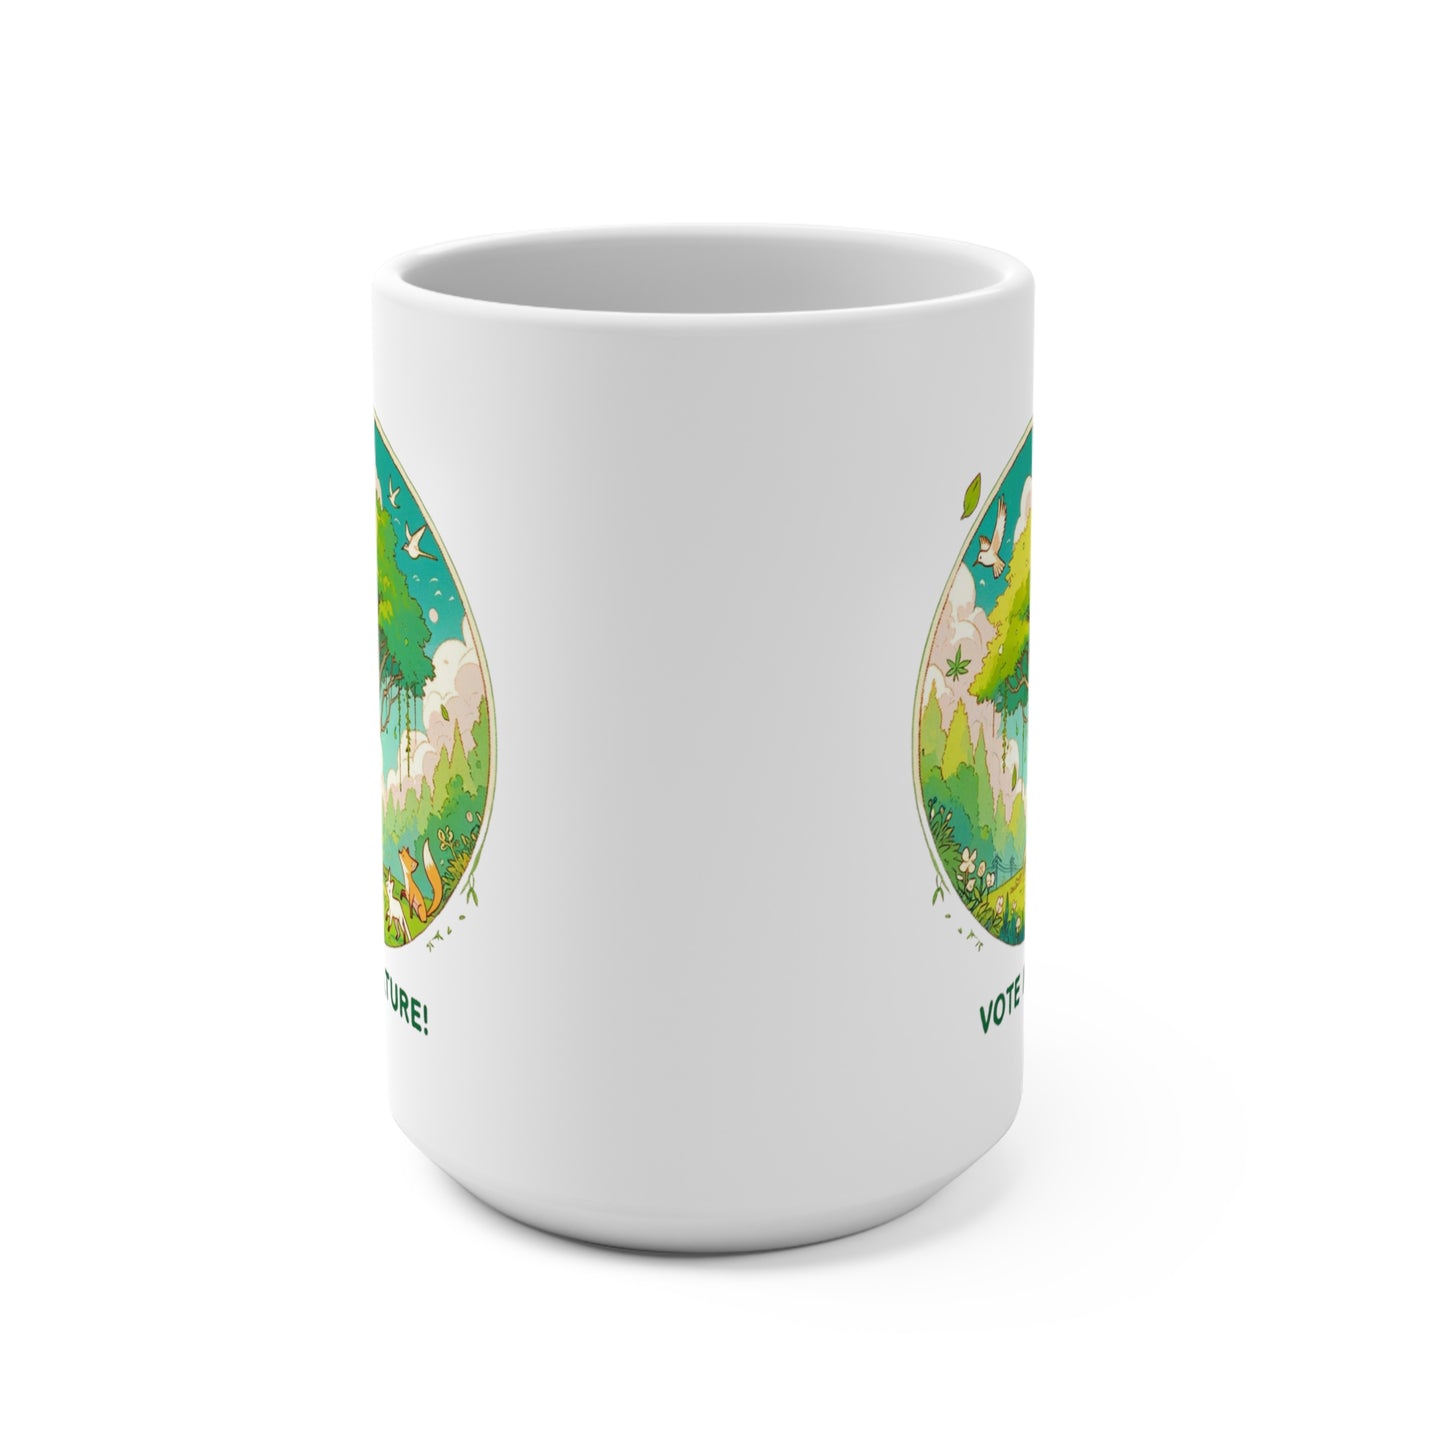 Inspirational Cute Statement Coffee Mug (15oz): Vote Nature! Cute Whimsical Design